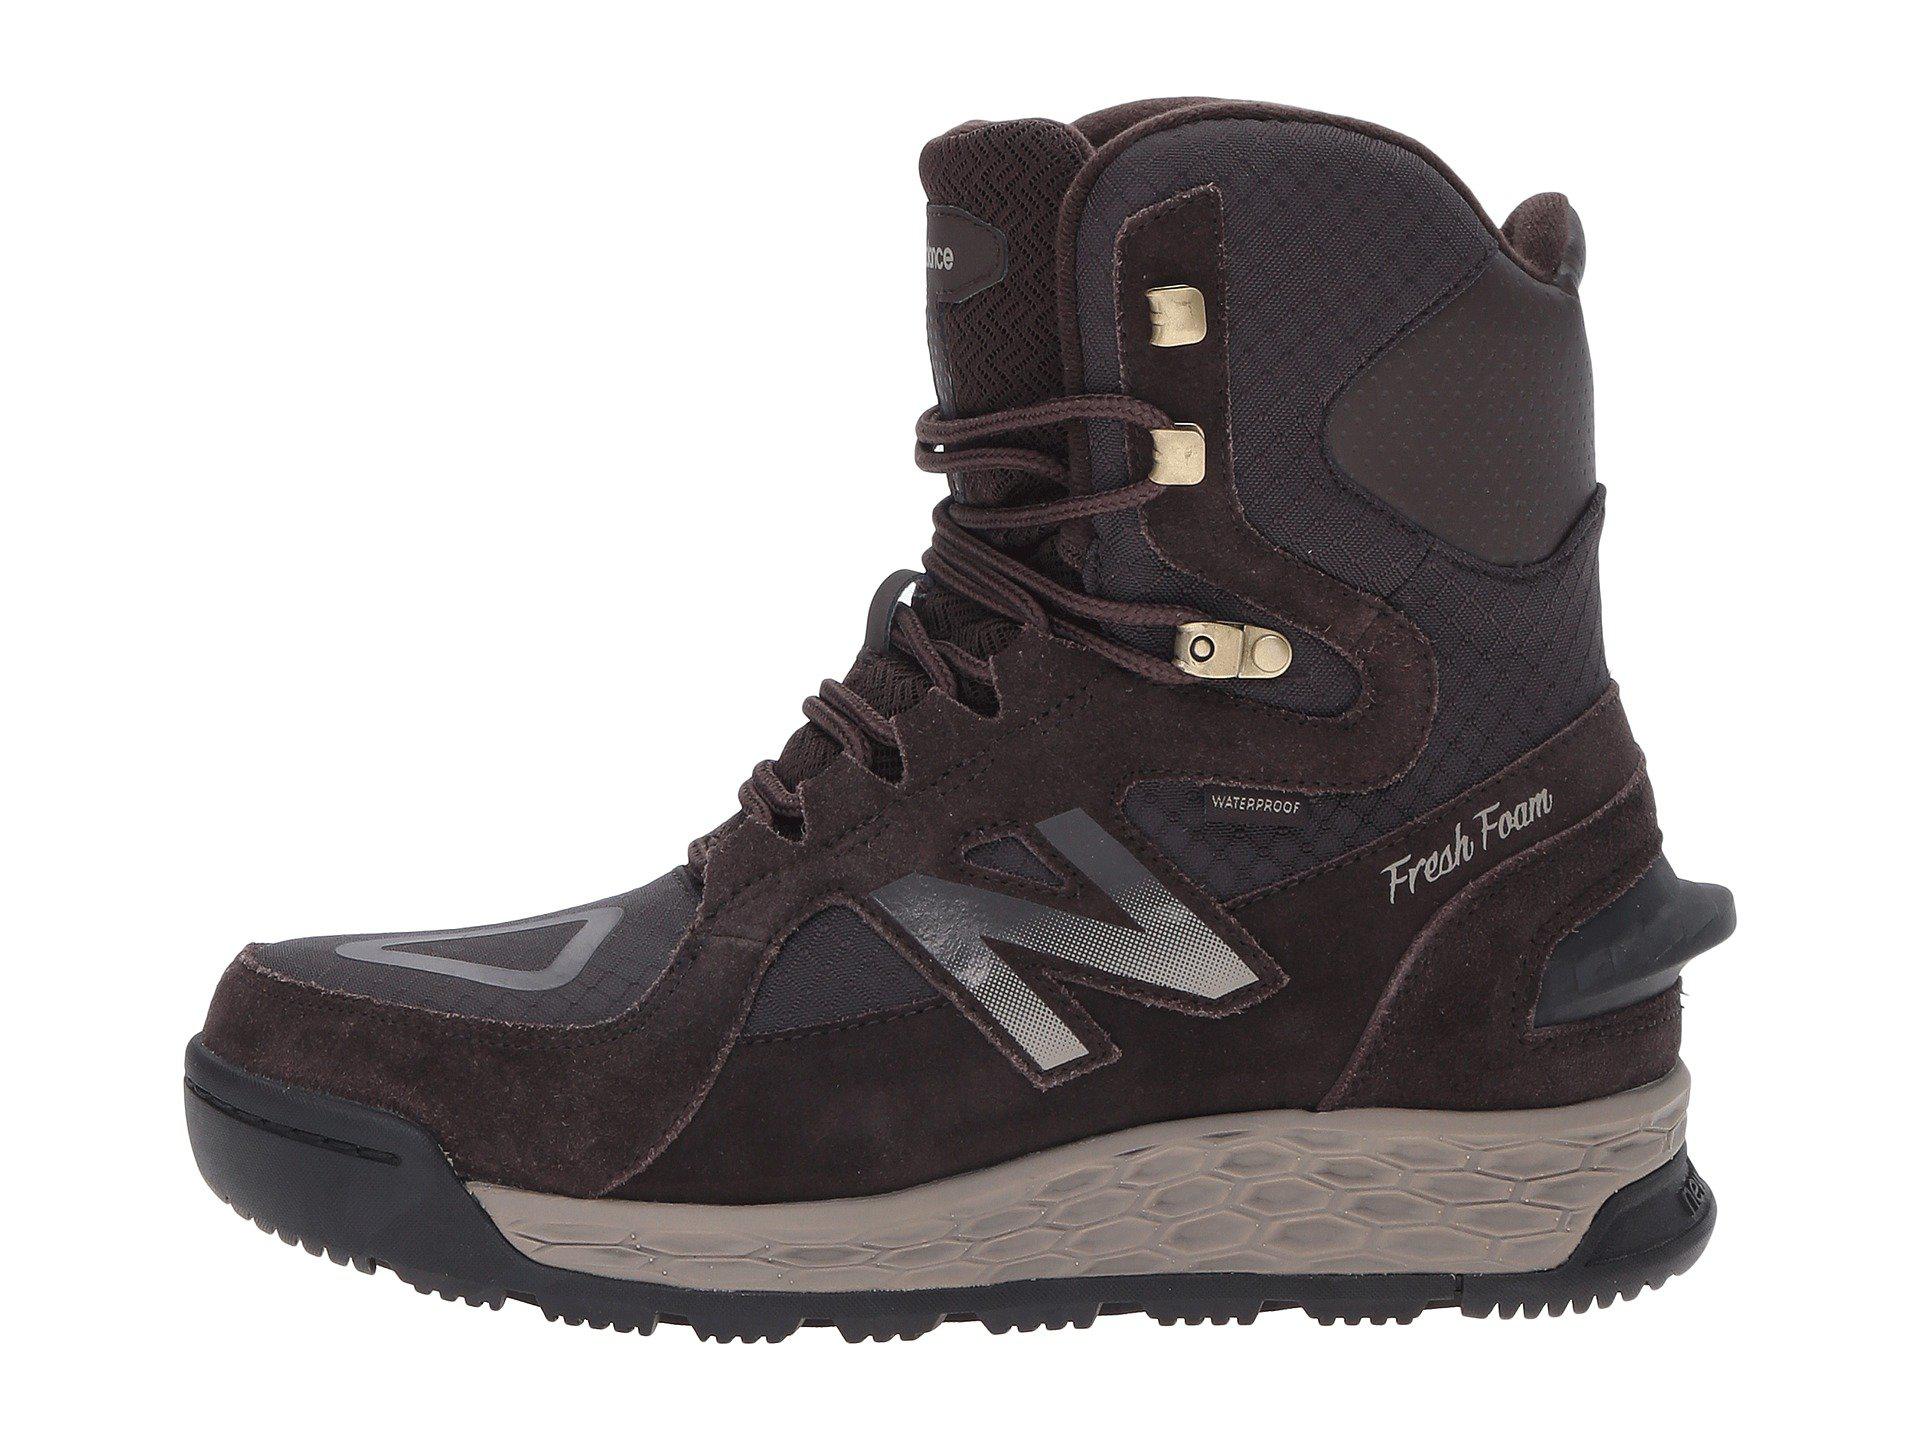 New Balance Suede Bm1000v1 (brown/orange) Men's Waterproof Boots for ...